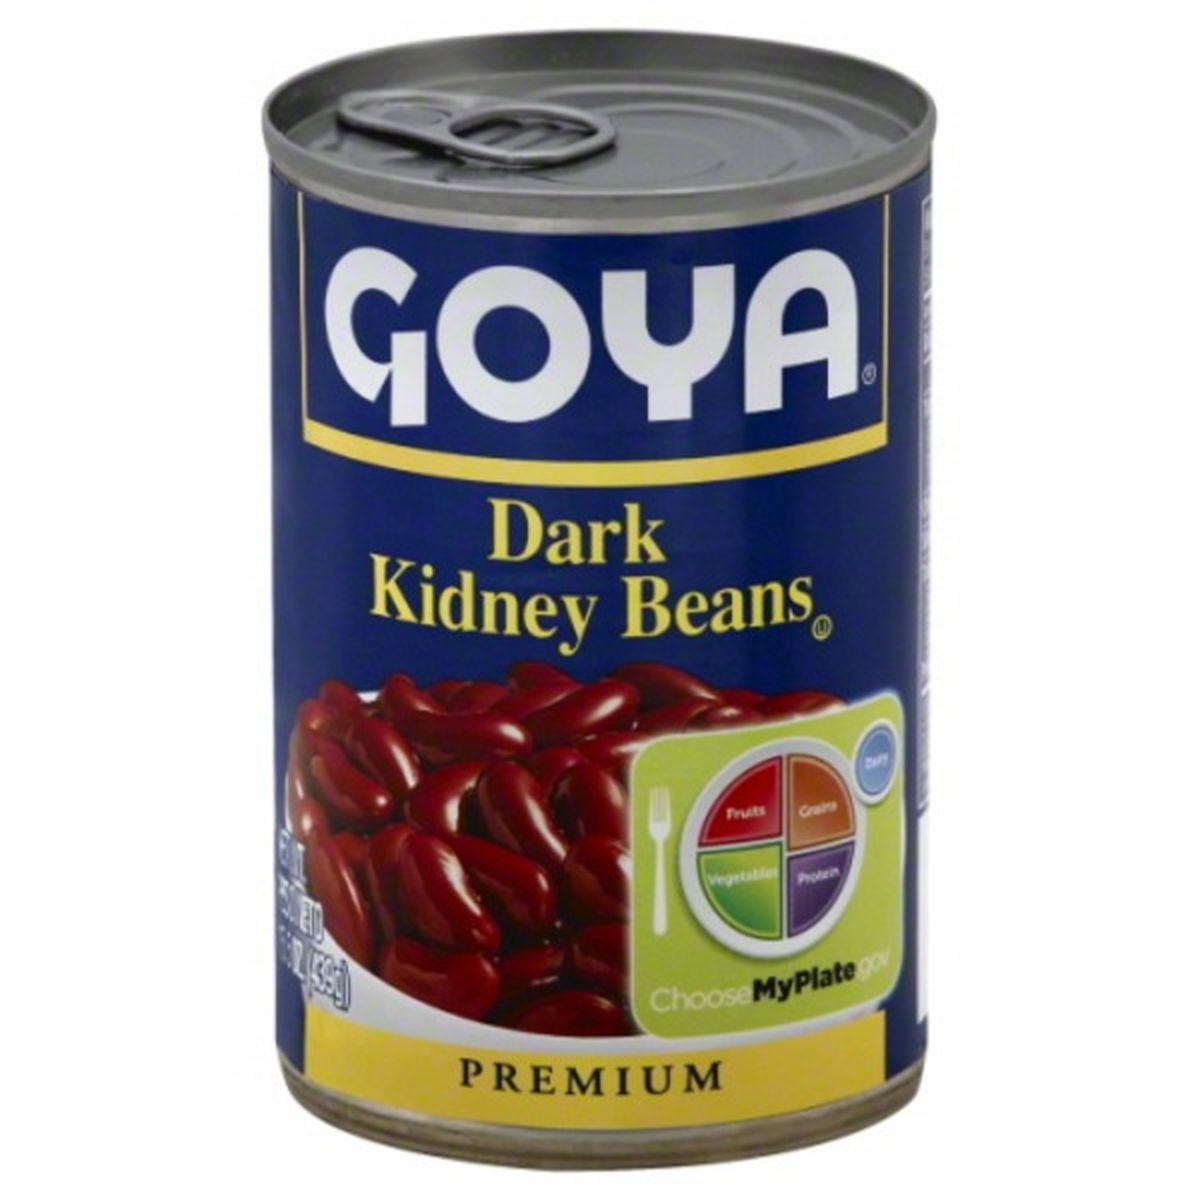 Calories in Goya Kidney Beans, Dark, Premium